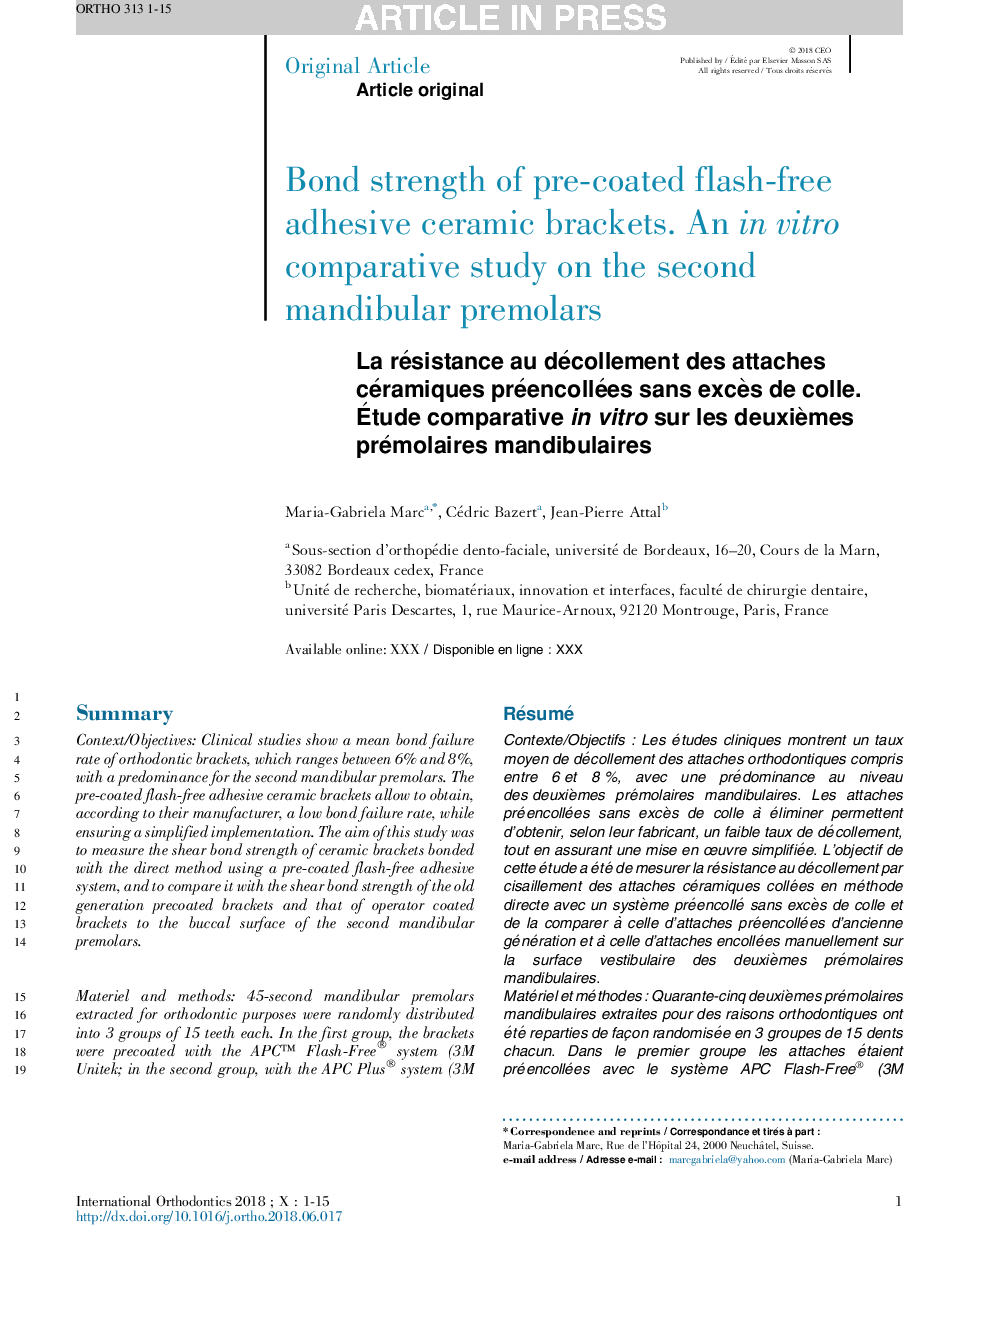 Bond strength of pre-coated flash-free adhesive ceramic brackets. An in vitro comparative study on the second mandibular premolars